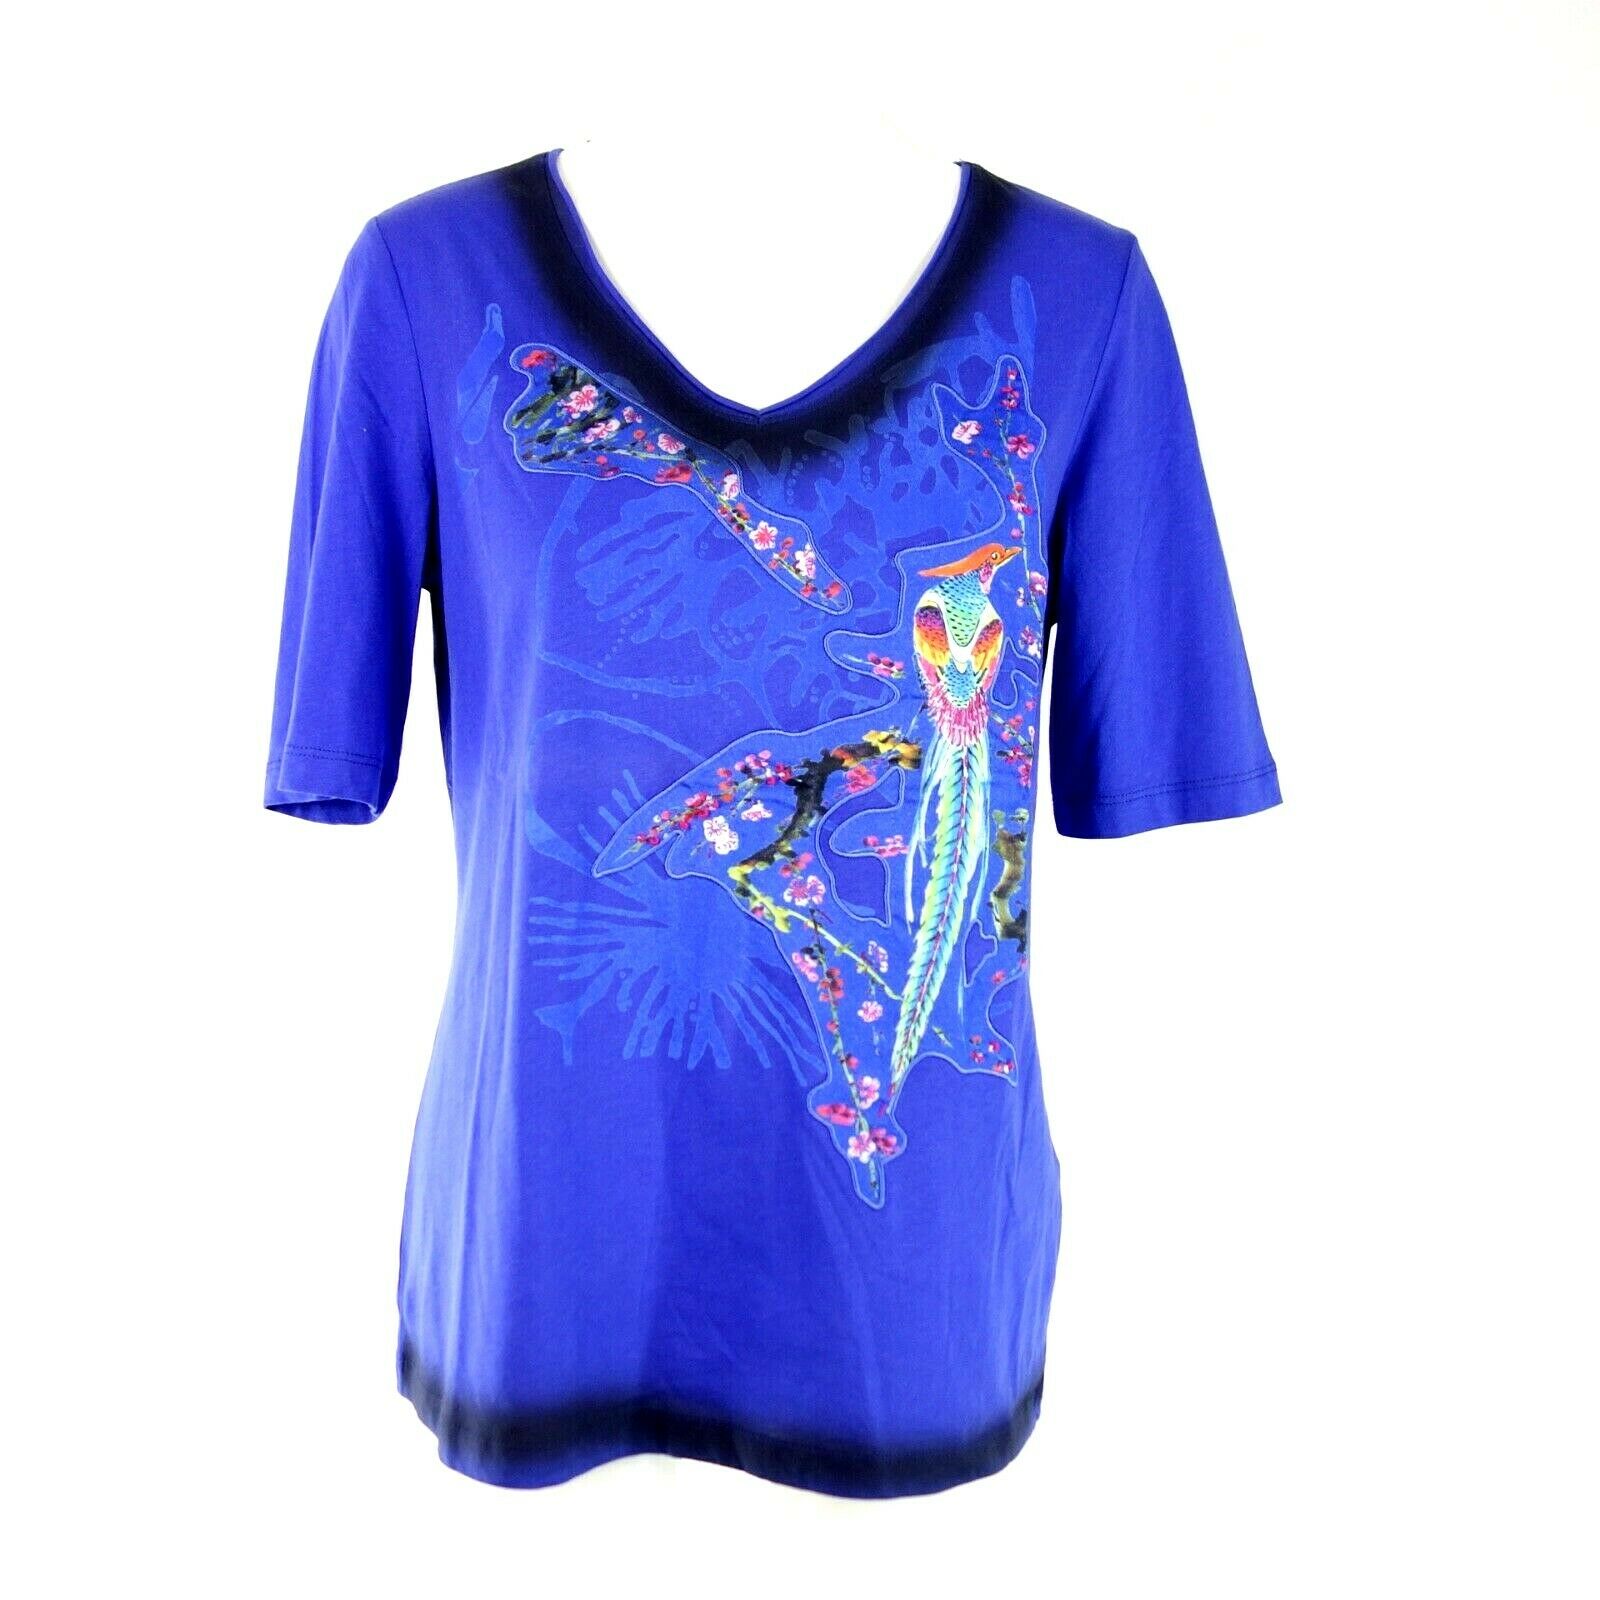 OUI Damen Sommer Shirt Sommershirt Gr 38 M Blau Print Kurzarm 100% Baumwolle Neu